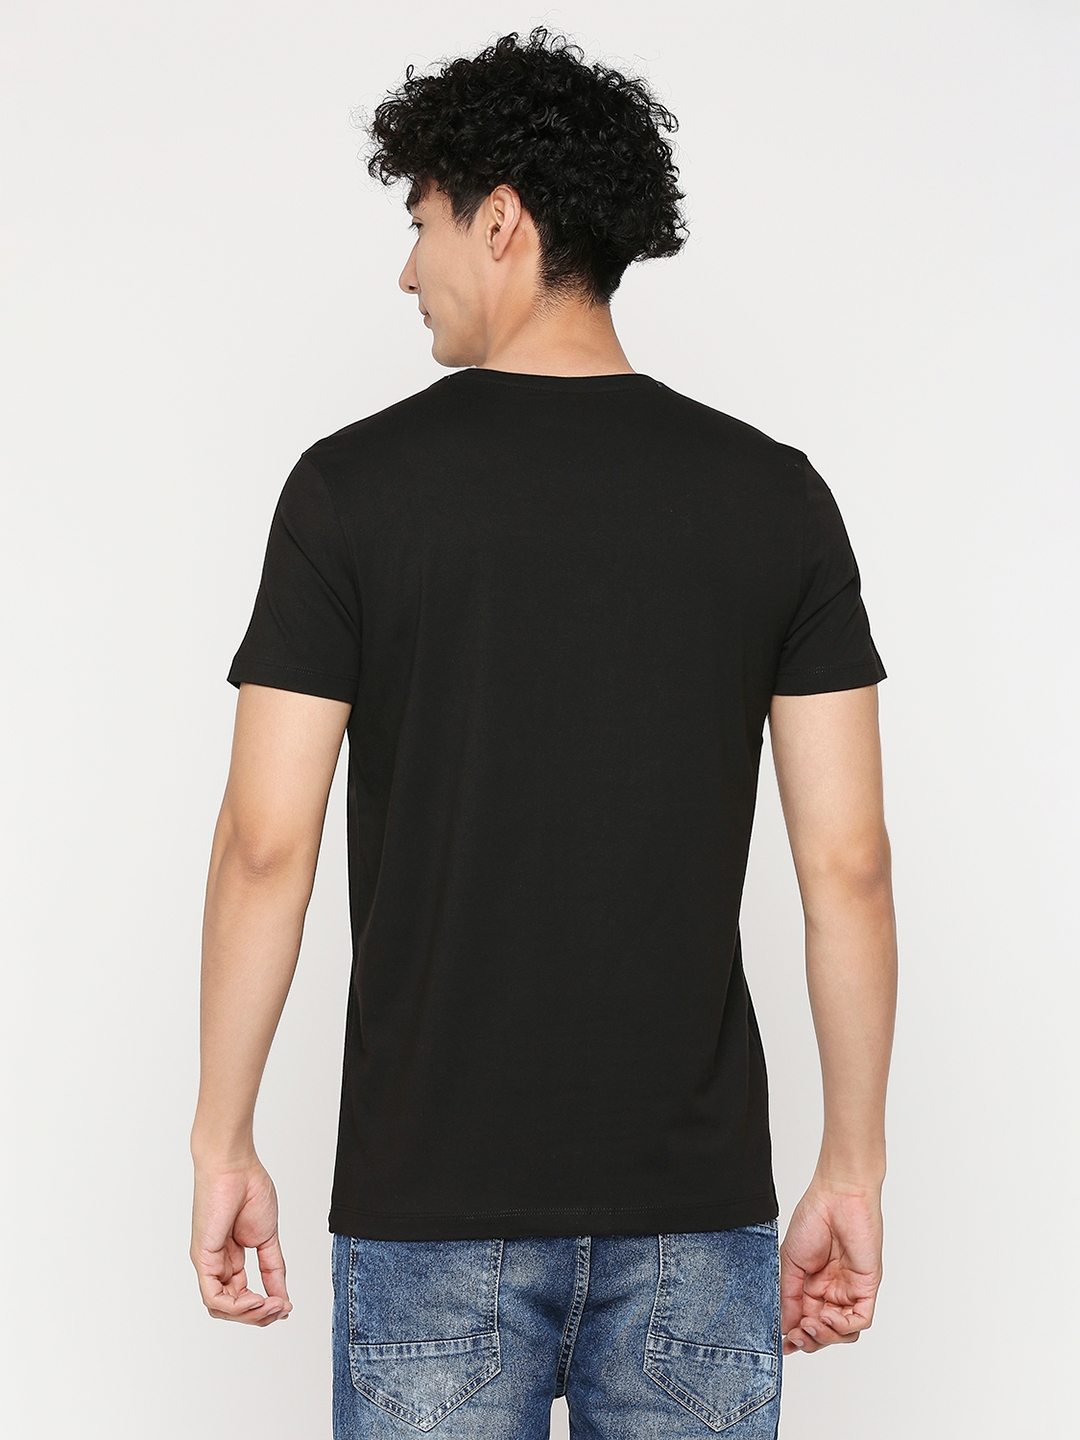 Underjeans by Spykar Men Black Cotton Half Sleeve Printed Tshirt